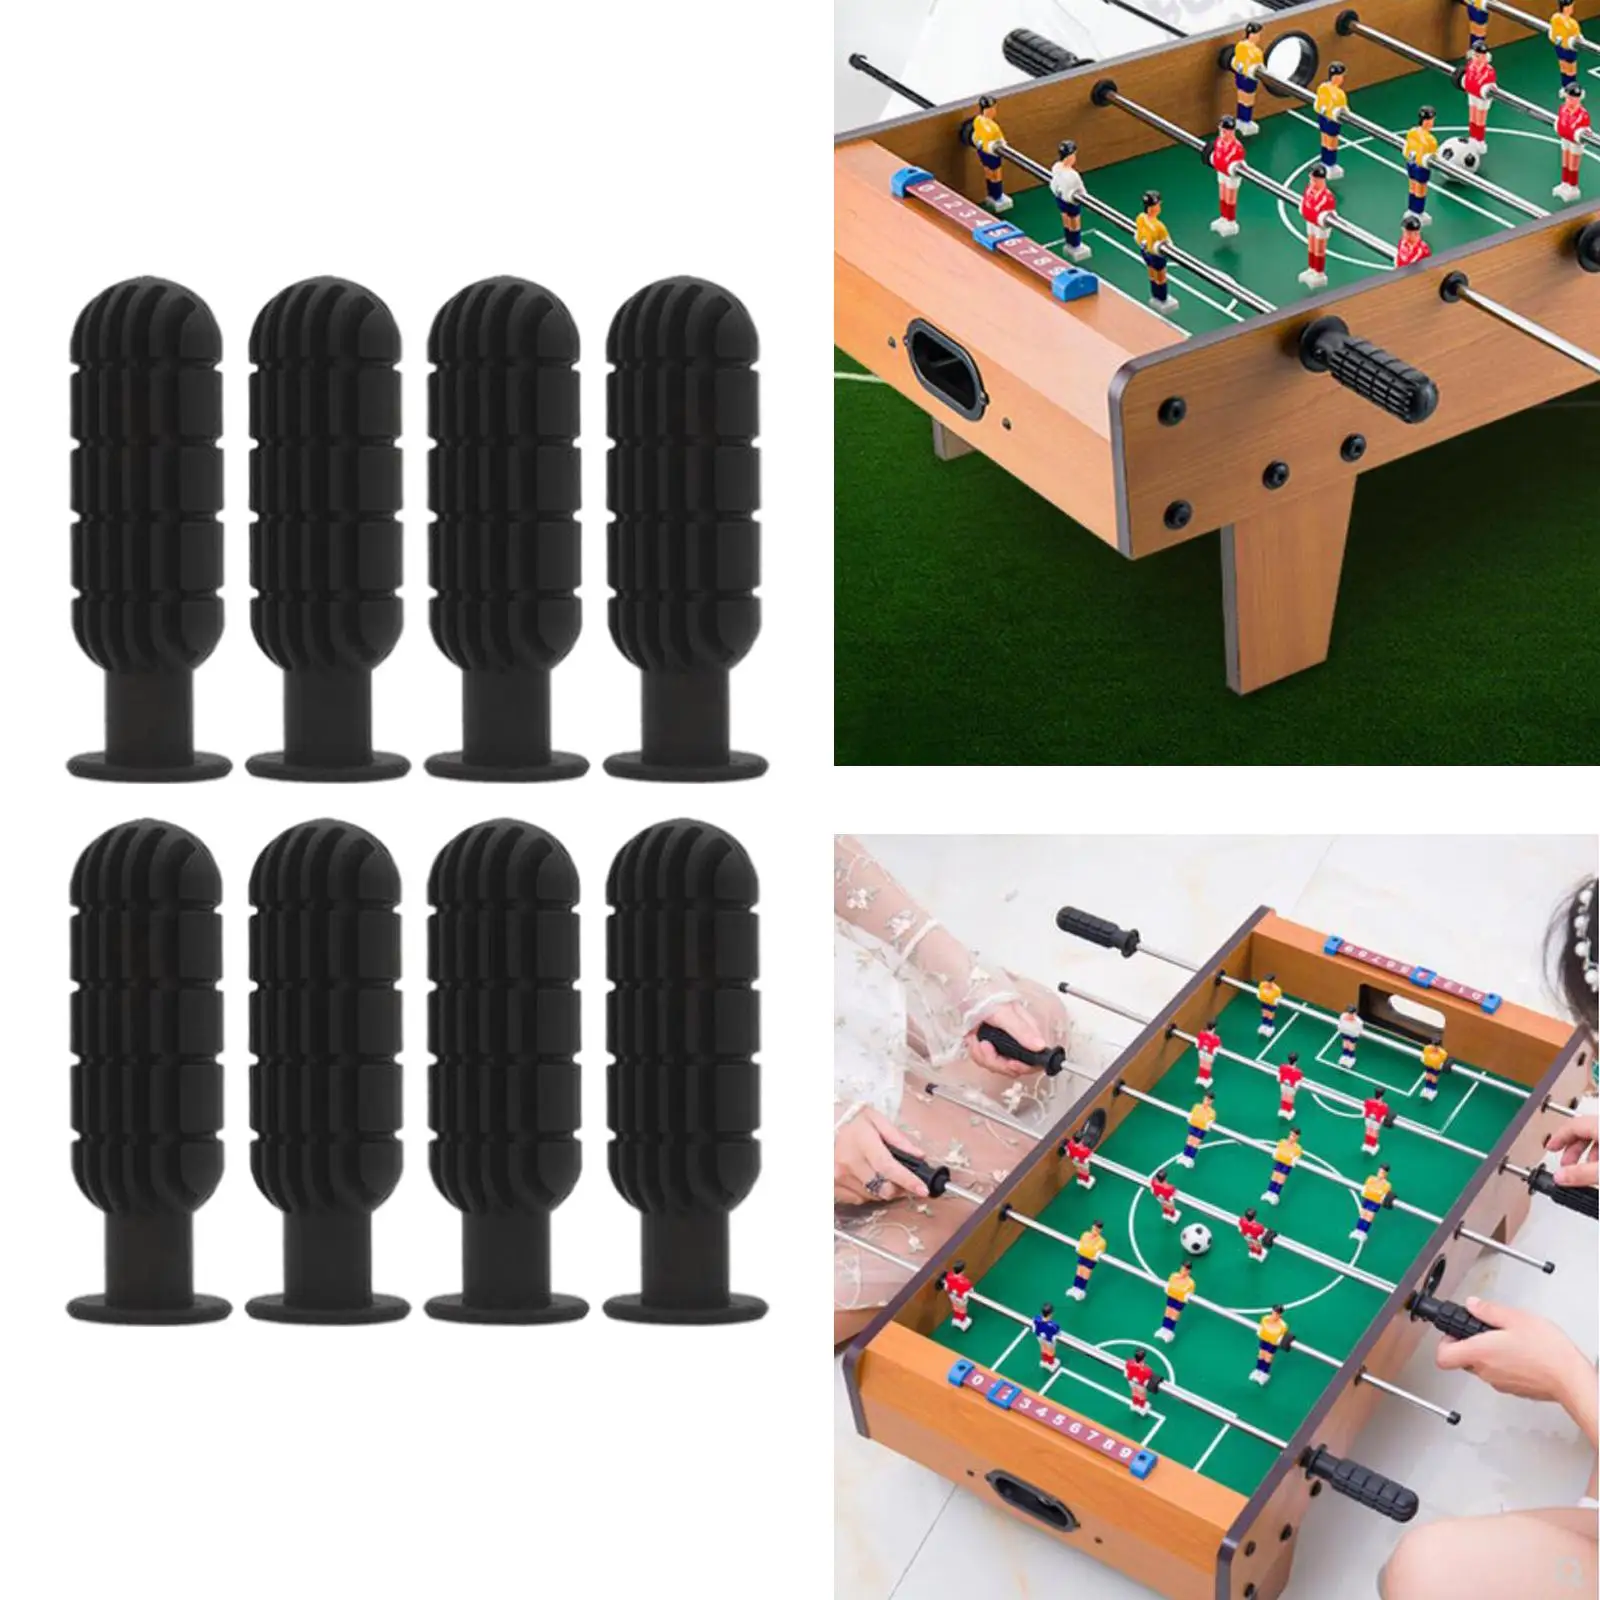  Premium Replacement Handles for Standard Foosball Tables, Black